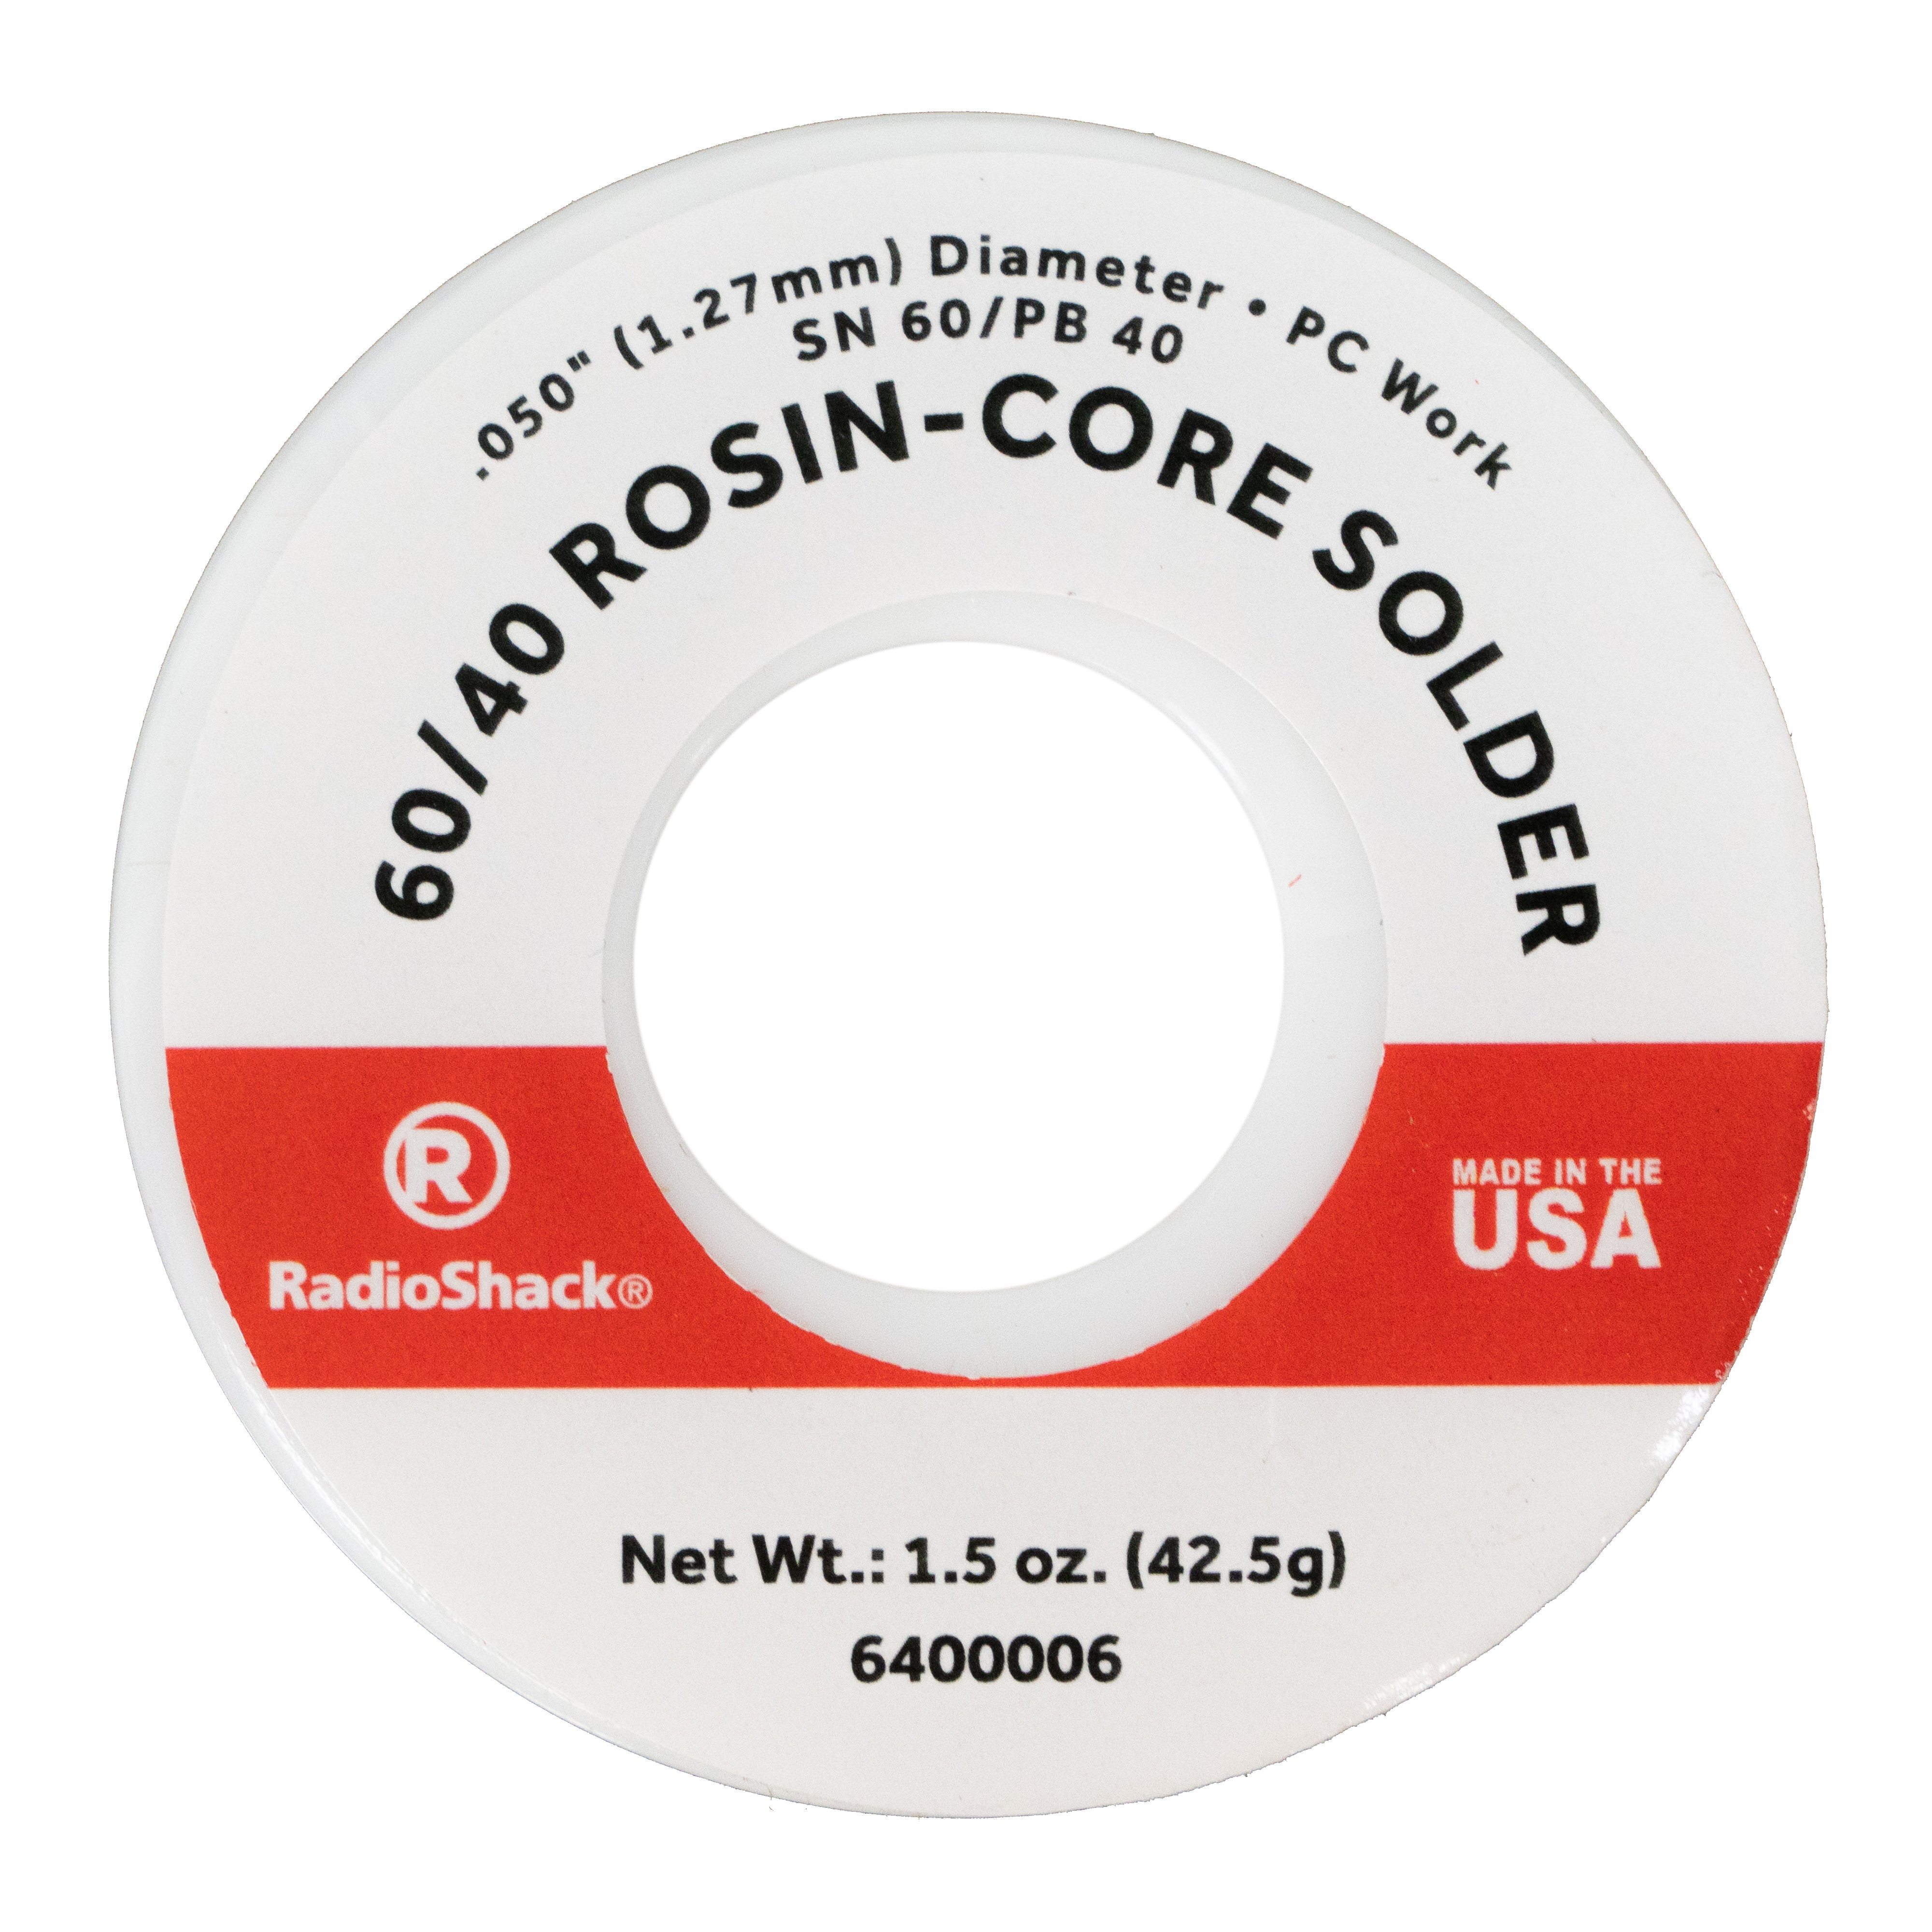 SnPb 60/40 Rosin-Core Solder 0.050" Diameter (1.5oz)